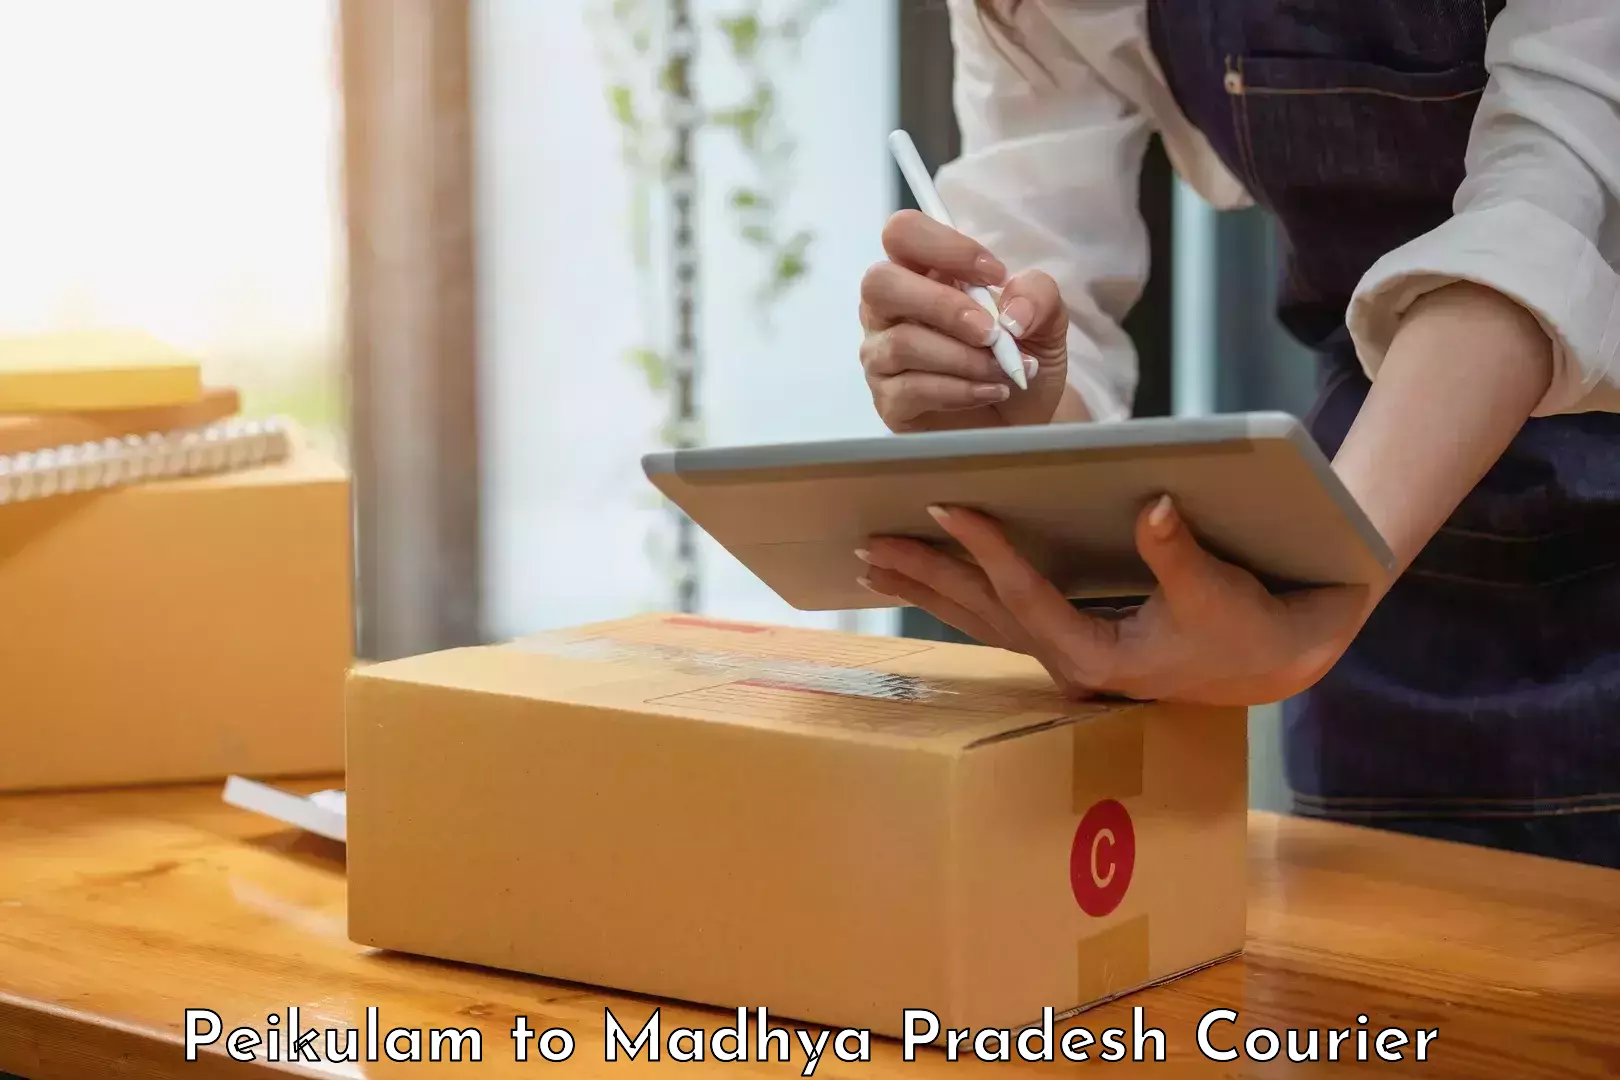 Optimized delivery routes Peikulam to Mandideep